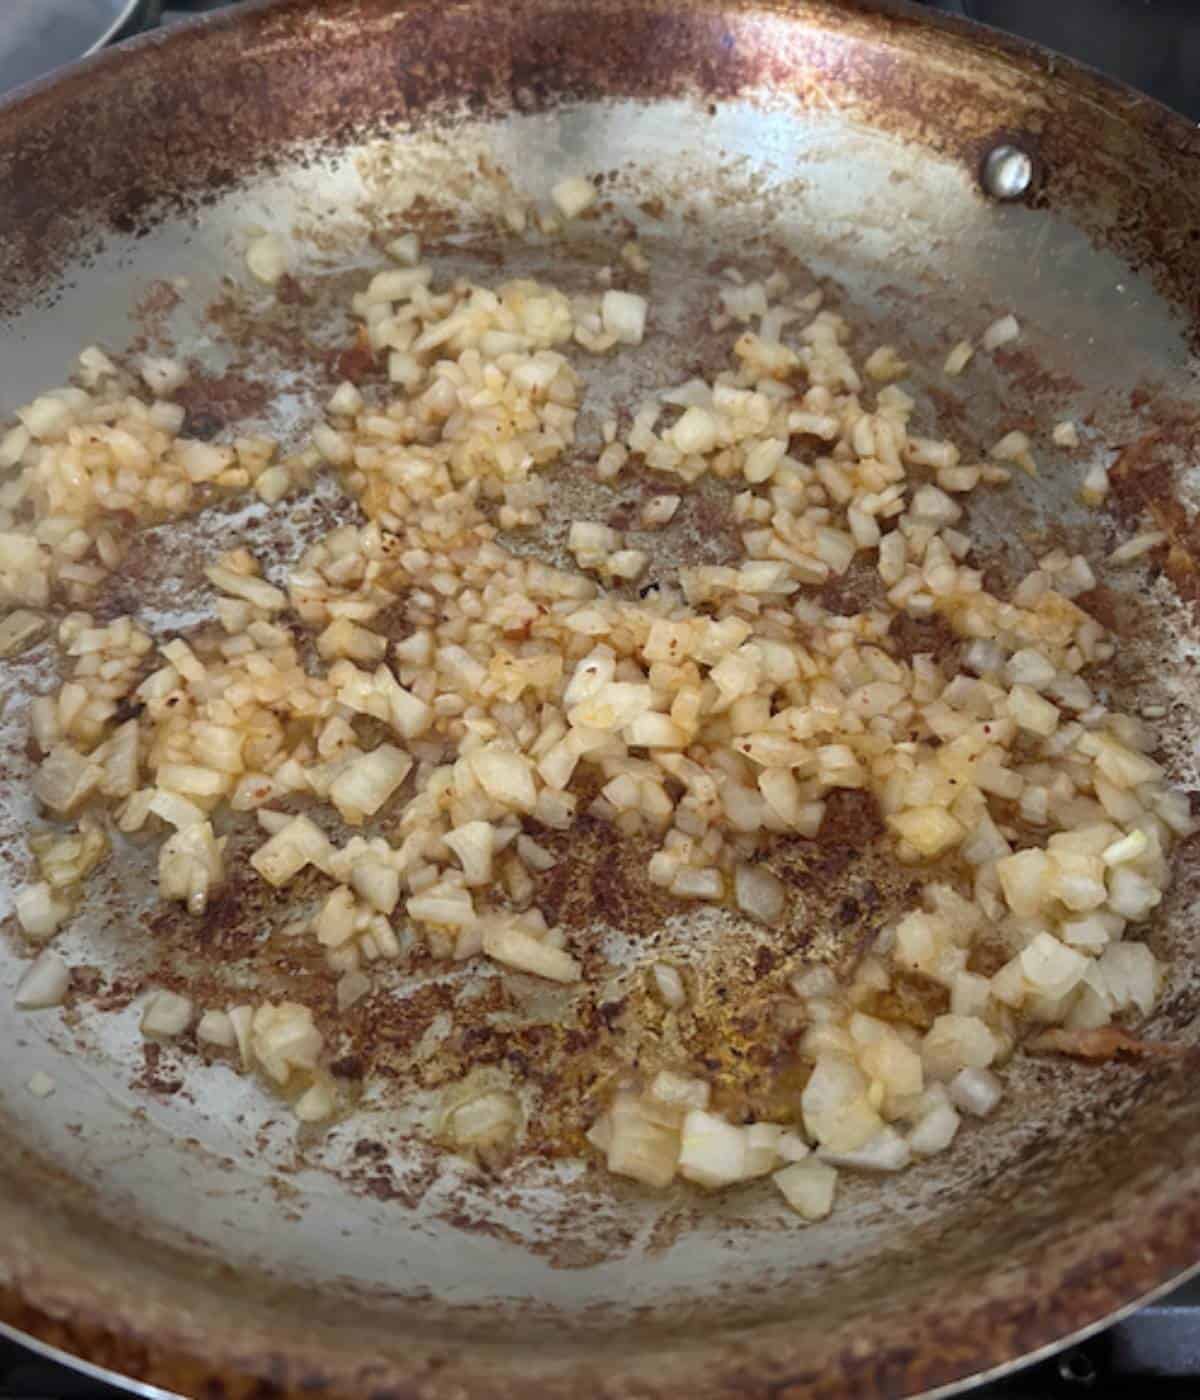 Onions sautéing in pan.